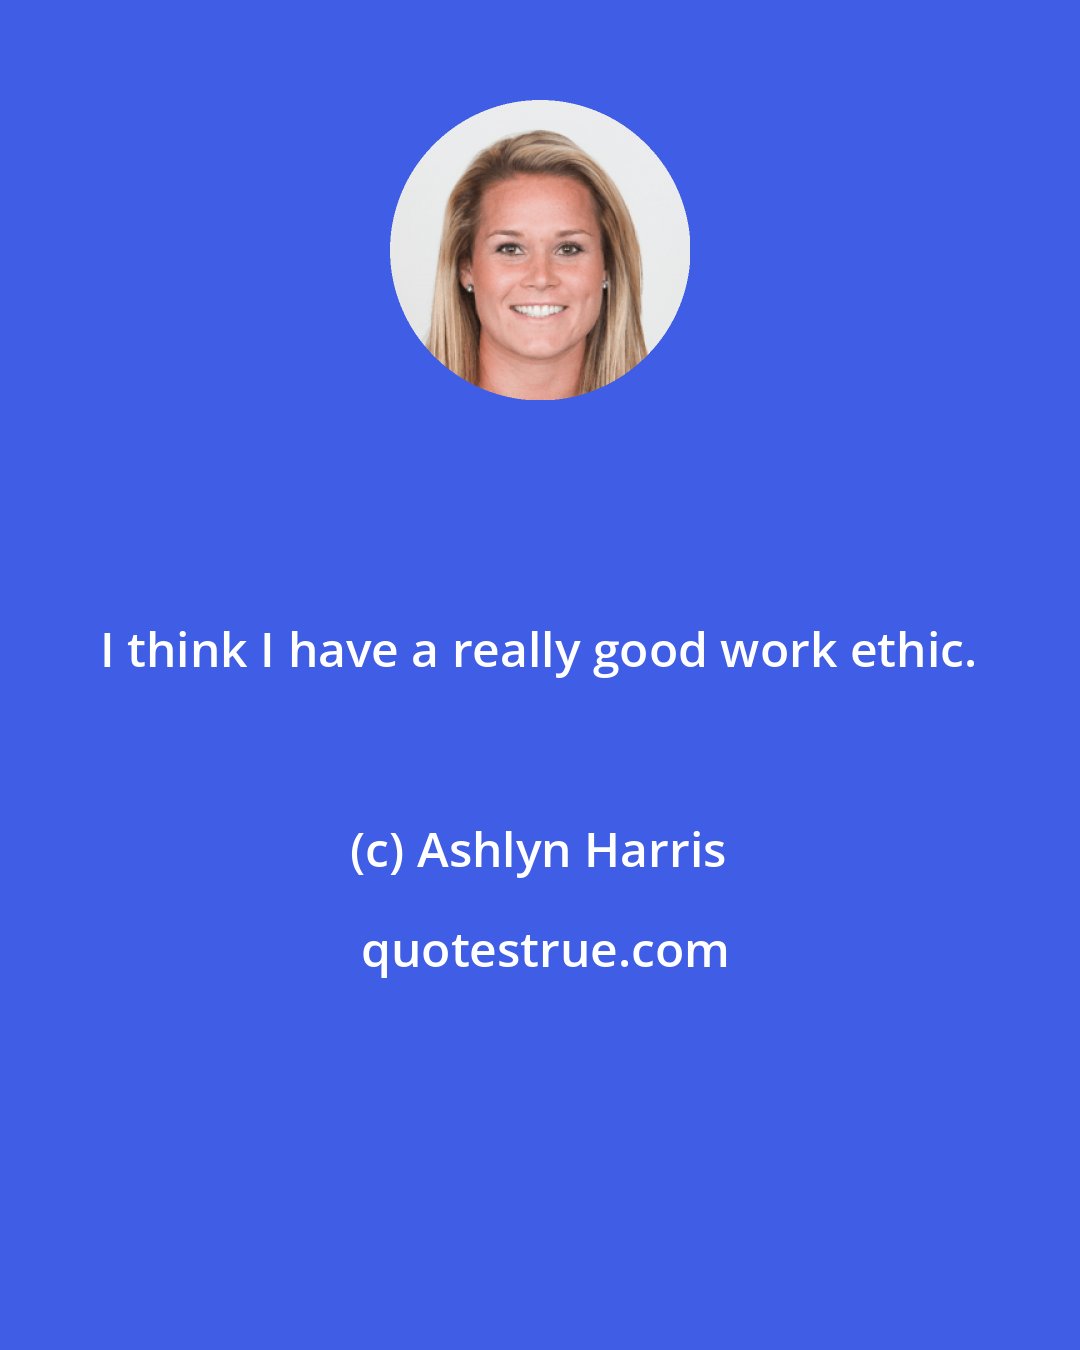 Ashlyn Harris: I think I have a really good work ethic.